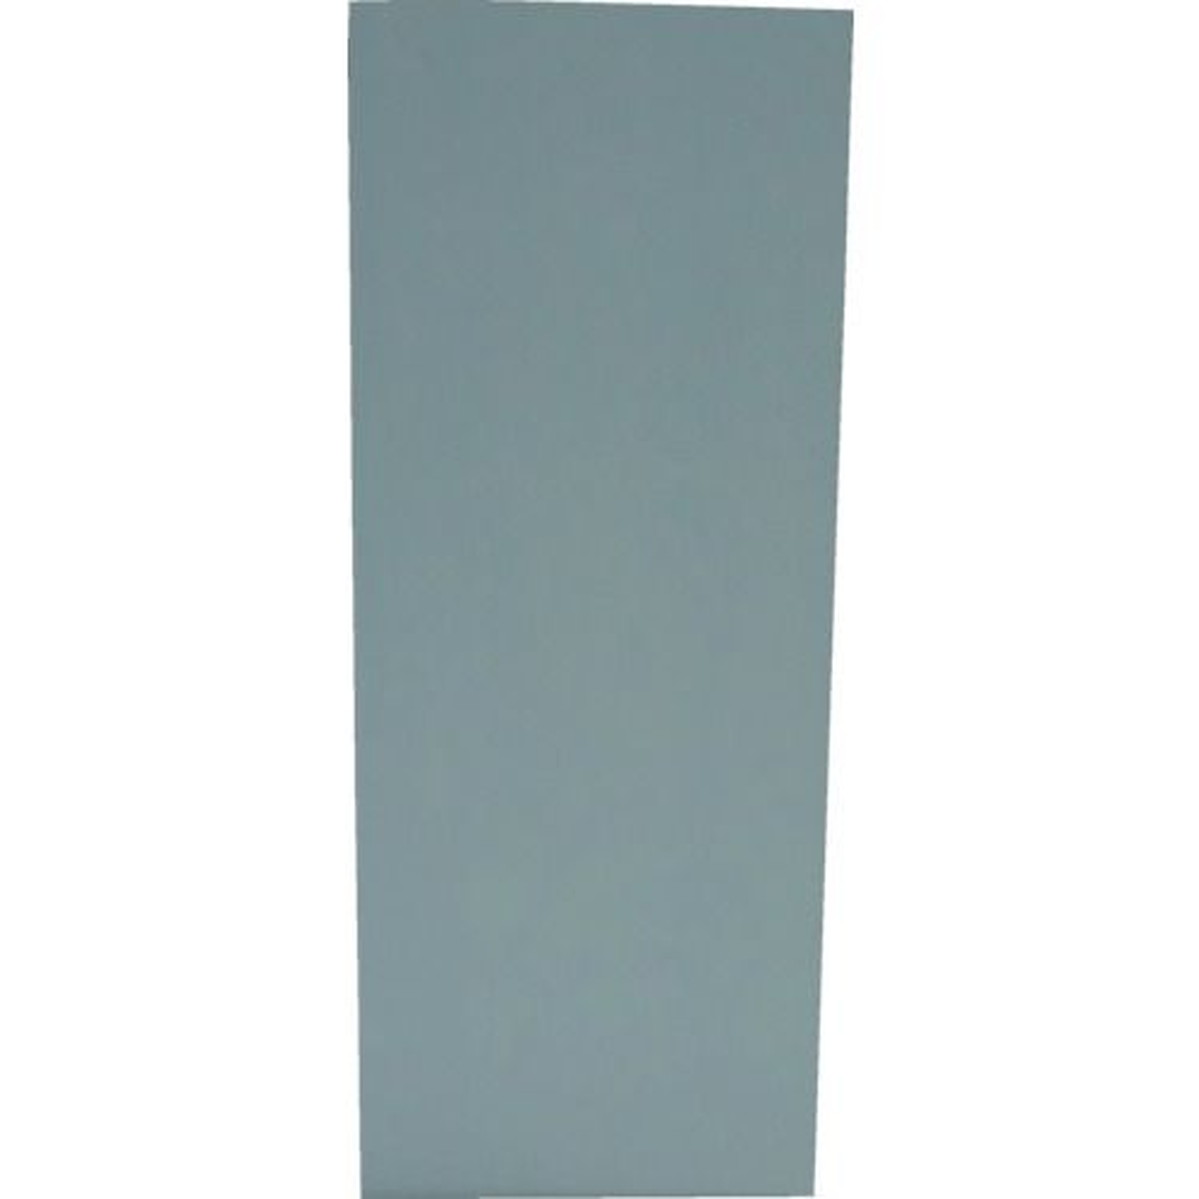 IRIS 554238 カラー化粧棚板 LBC−1830 ホワイト 1枚 (LBC-1830-WH)